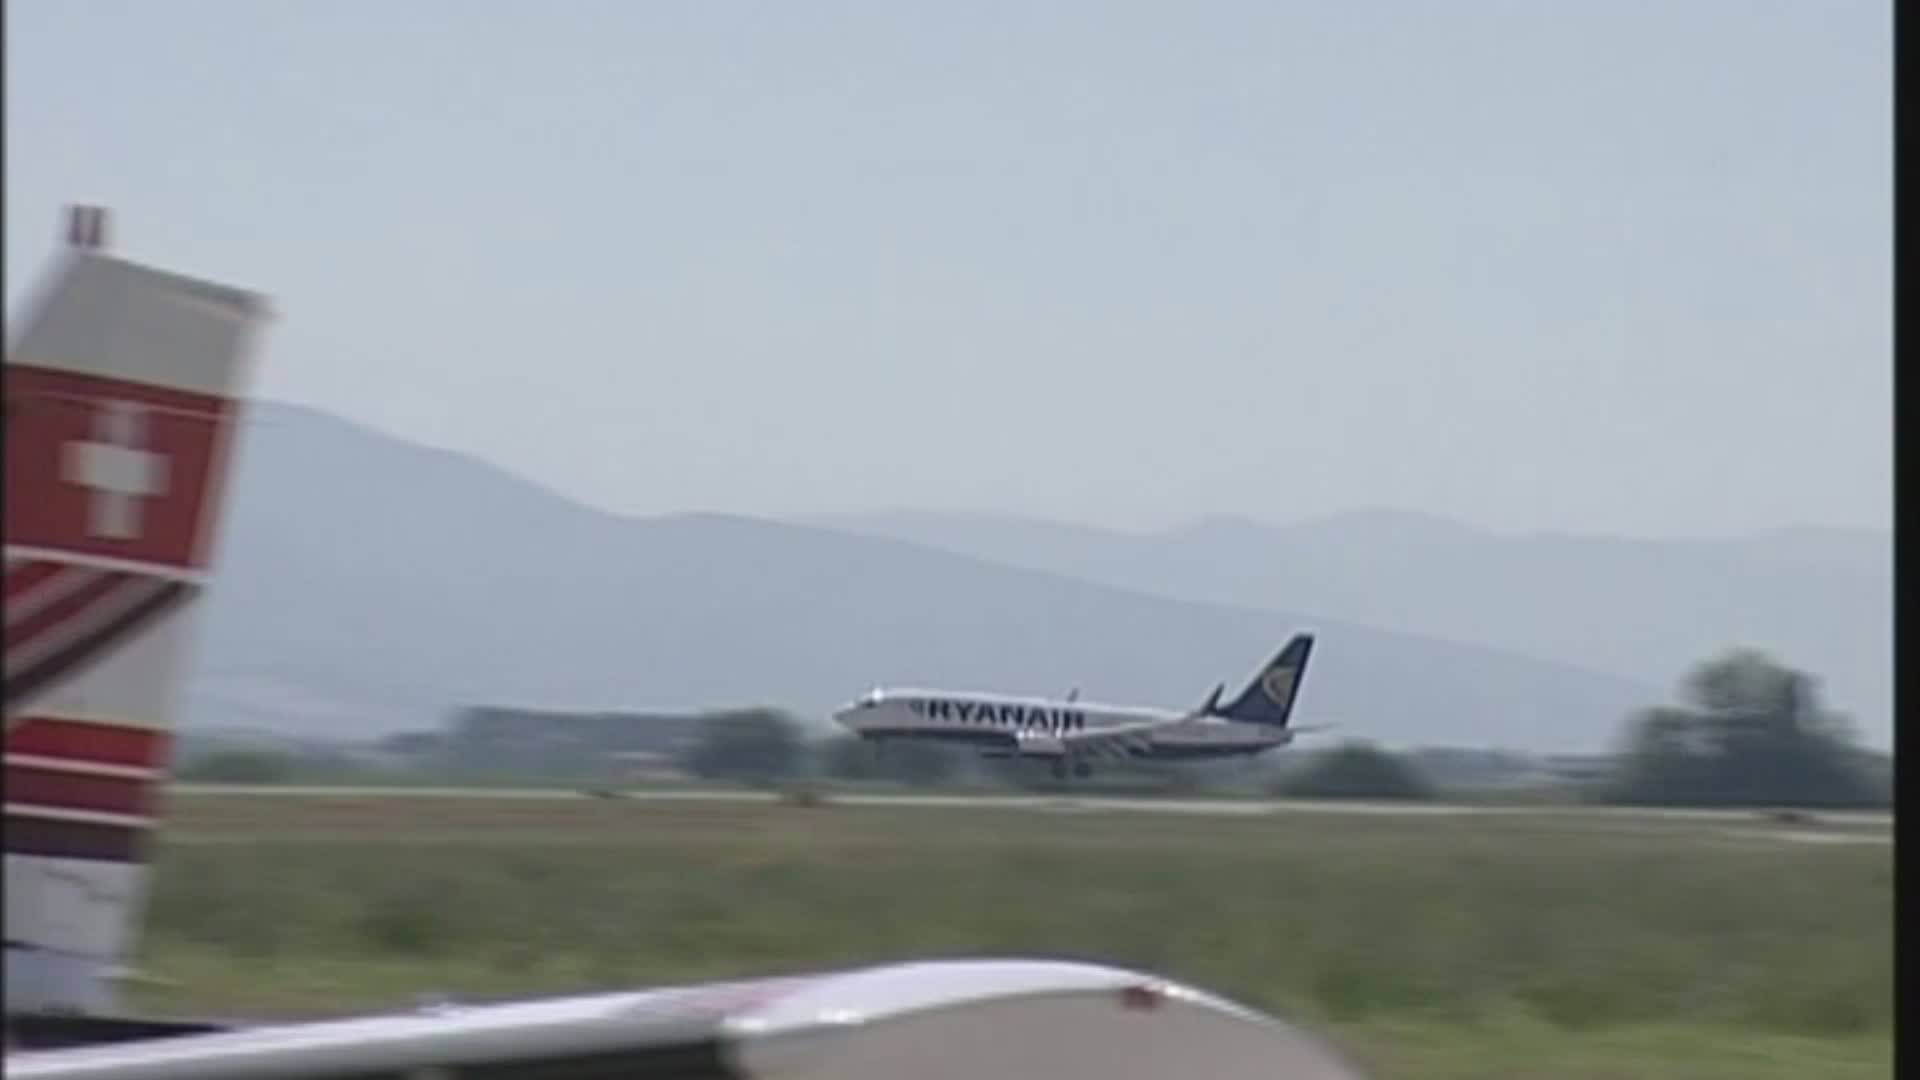 Aeroporto Umbria, Ryanair presenta piano estivo: 21 voli settimanali